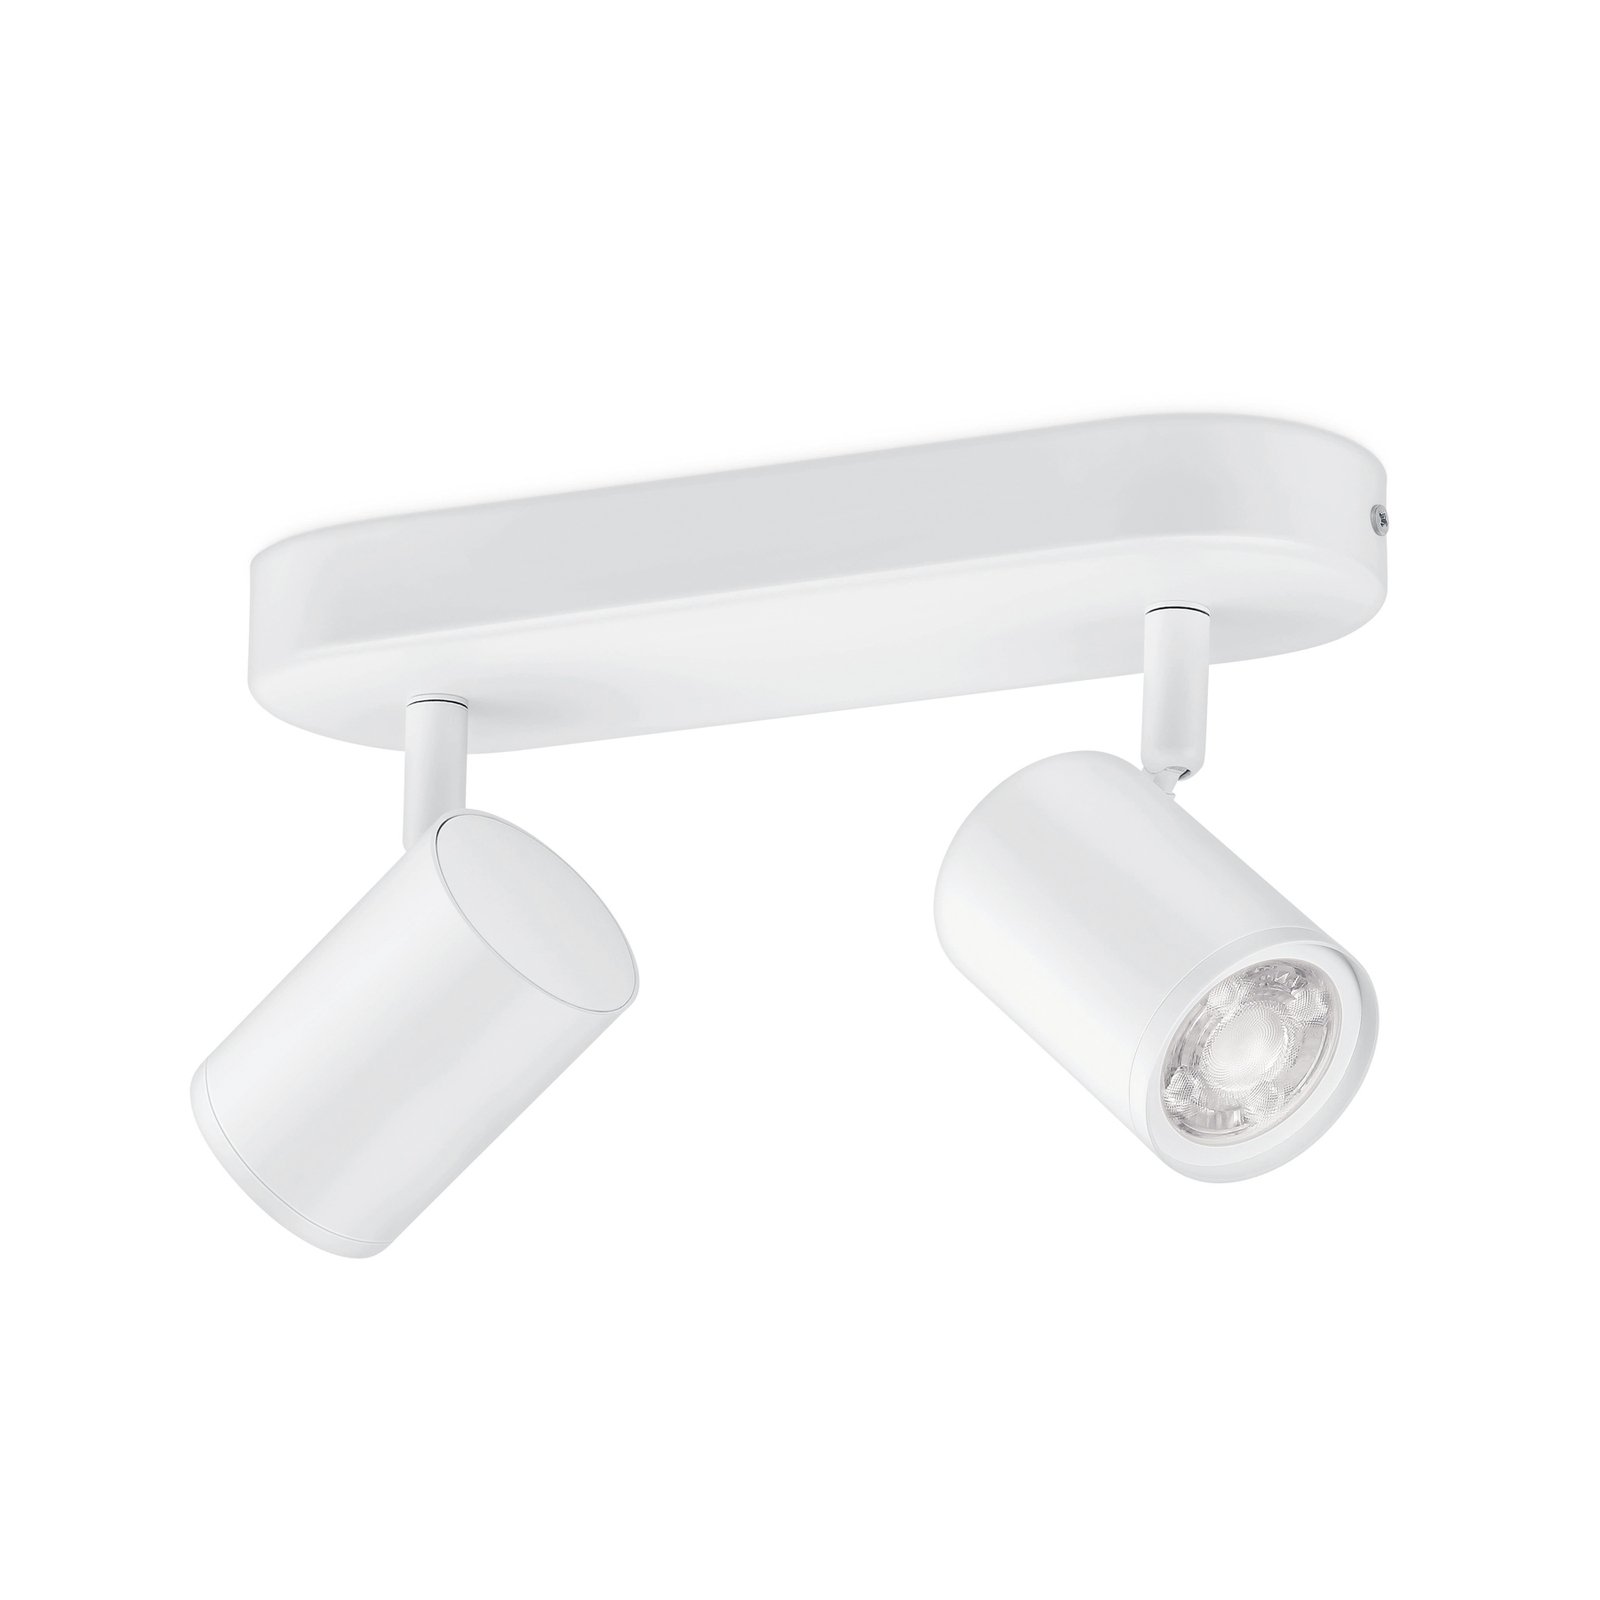 WiZ Imageo LED spot 2-bulb, RGB, white